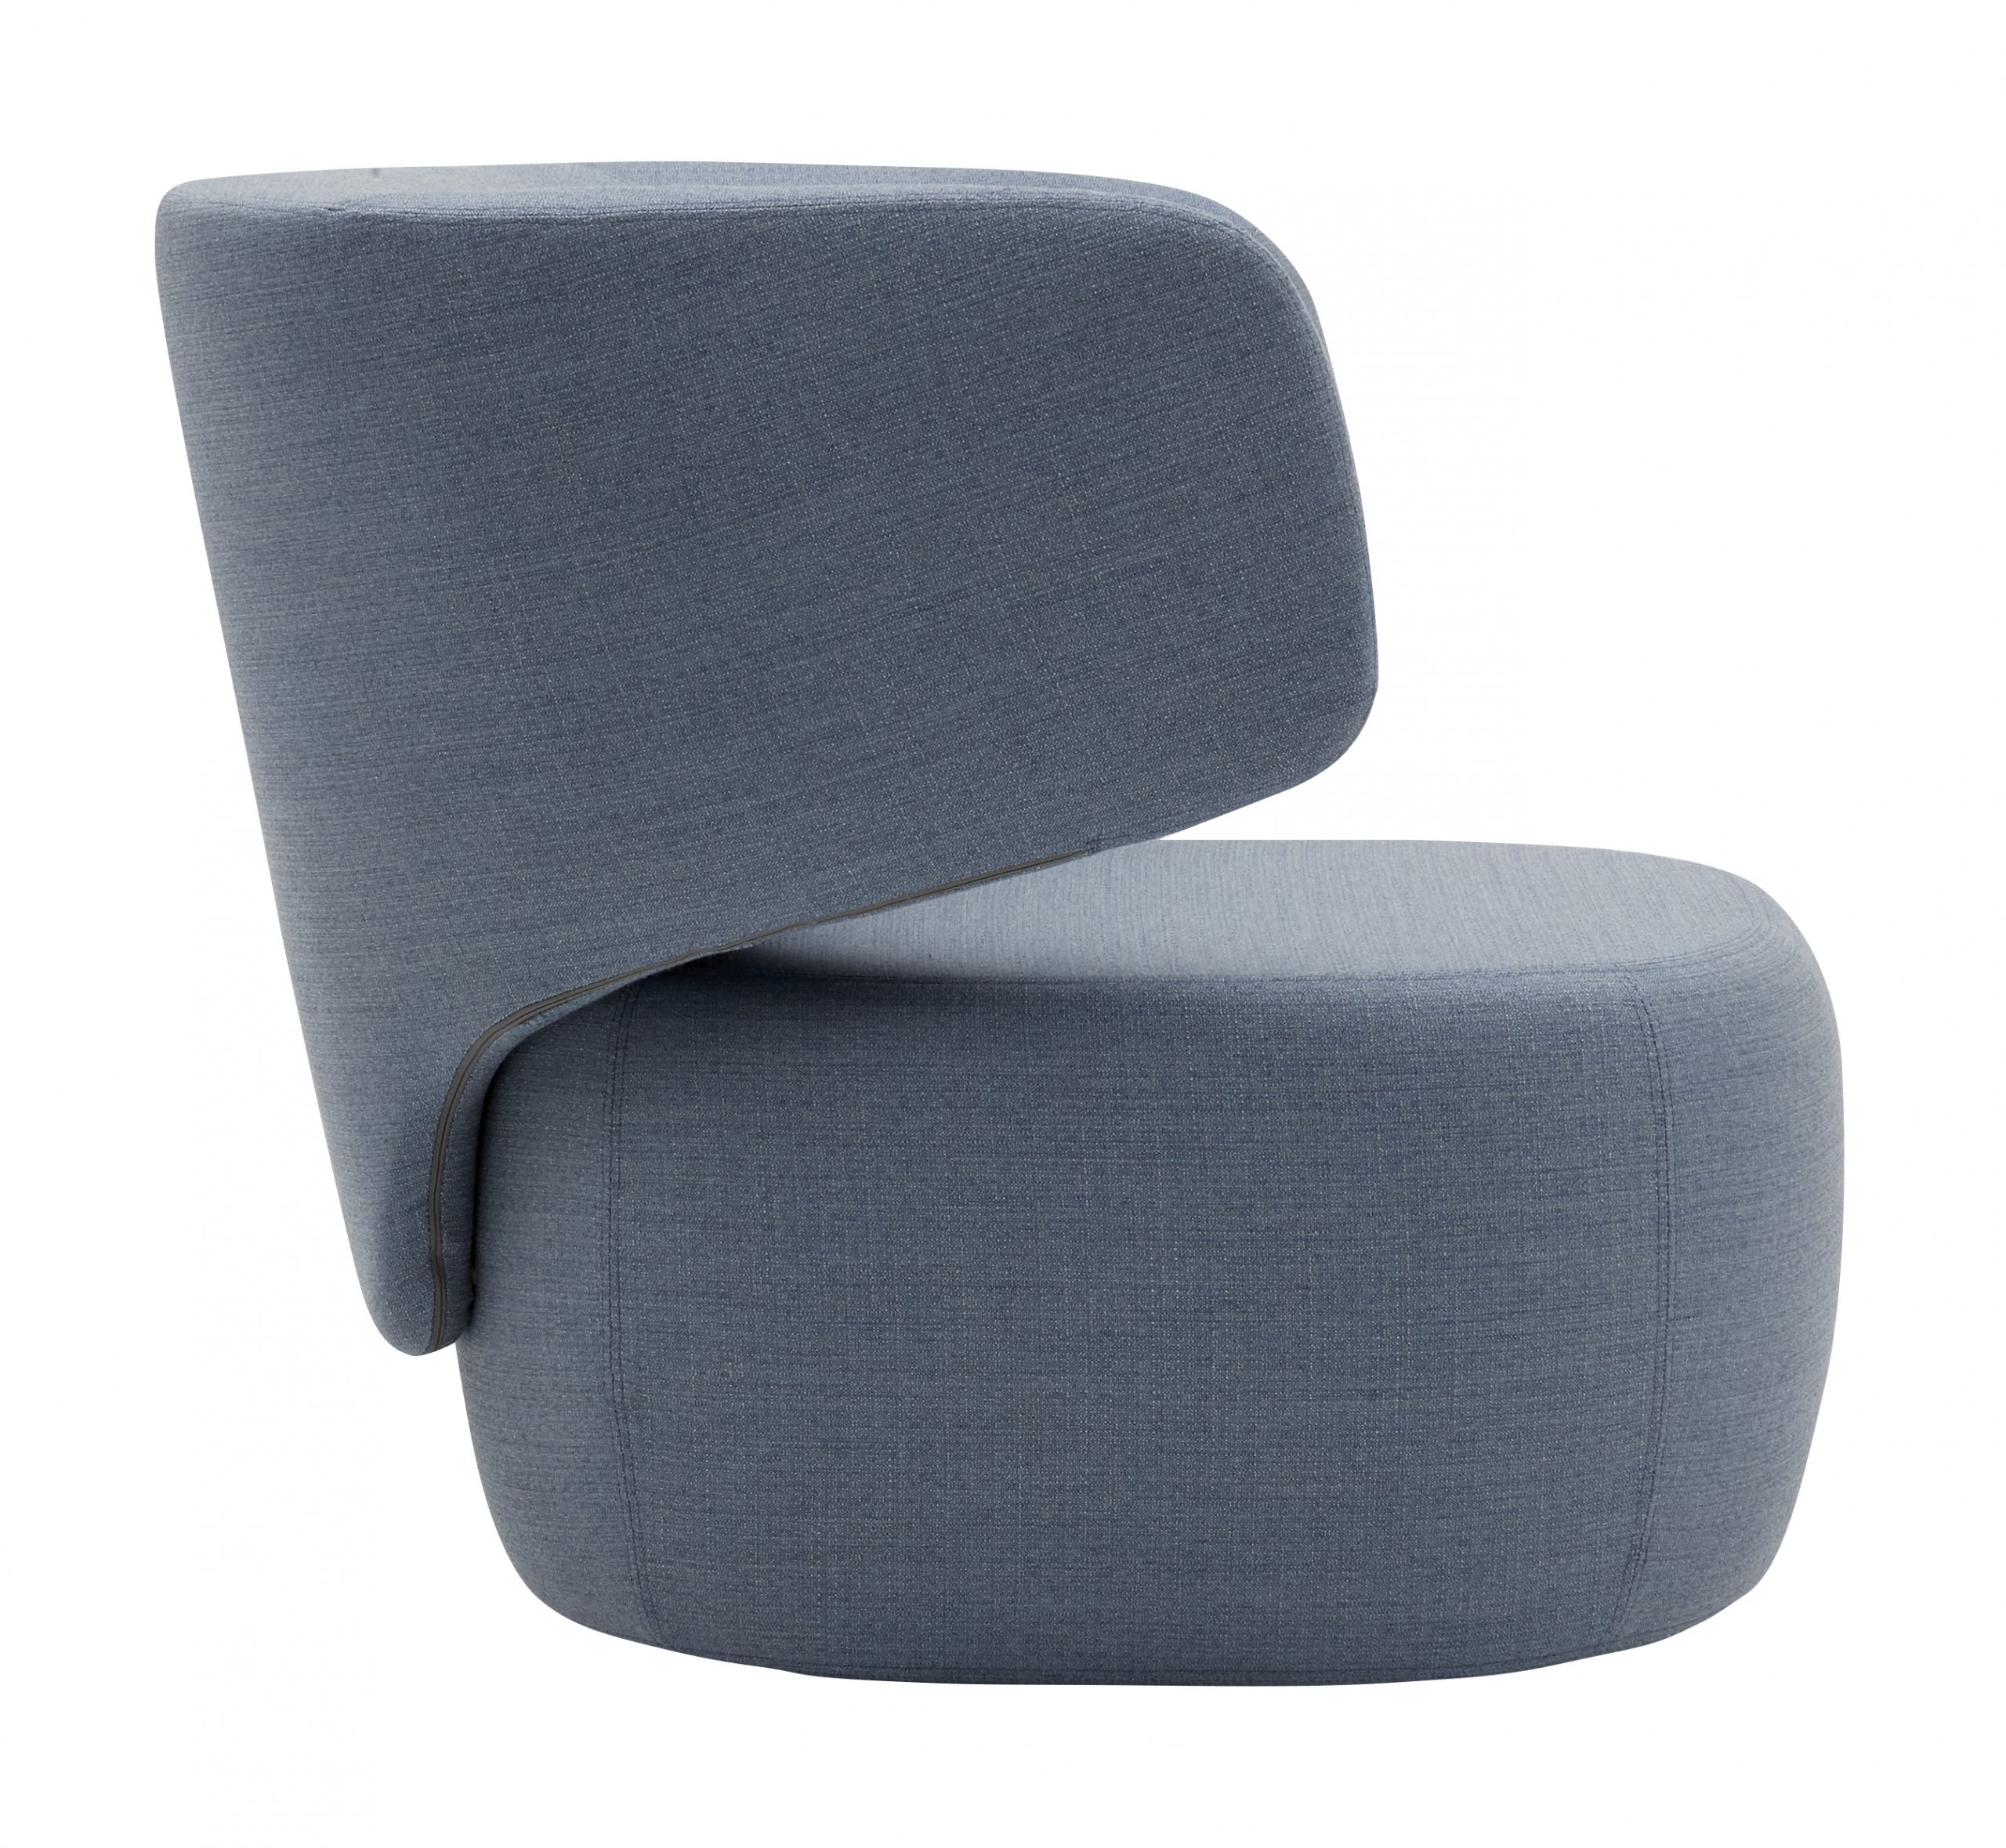 basel-sofa-chair-high-res-09-scaled.jpg